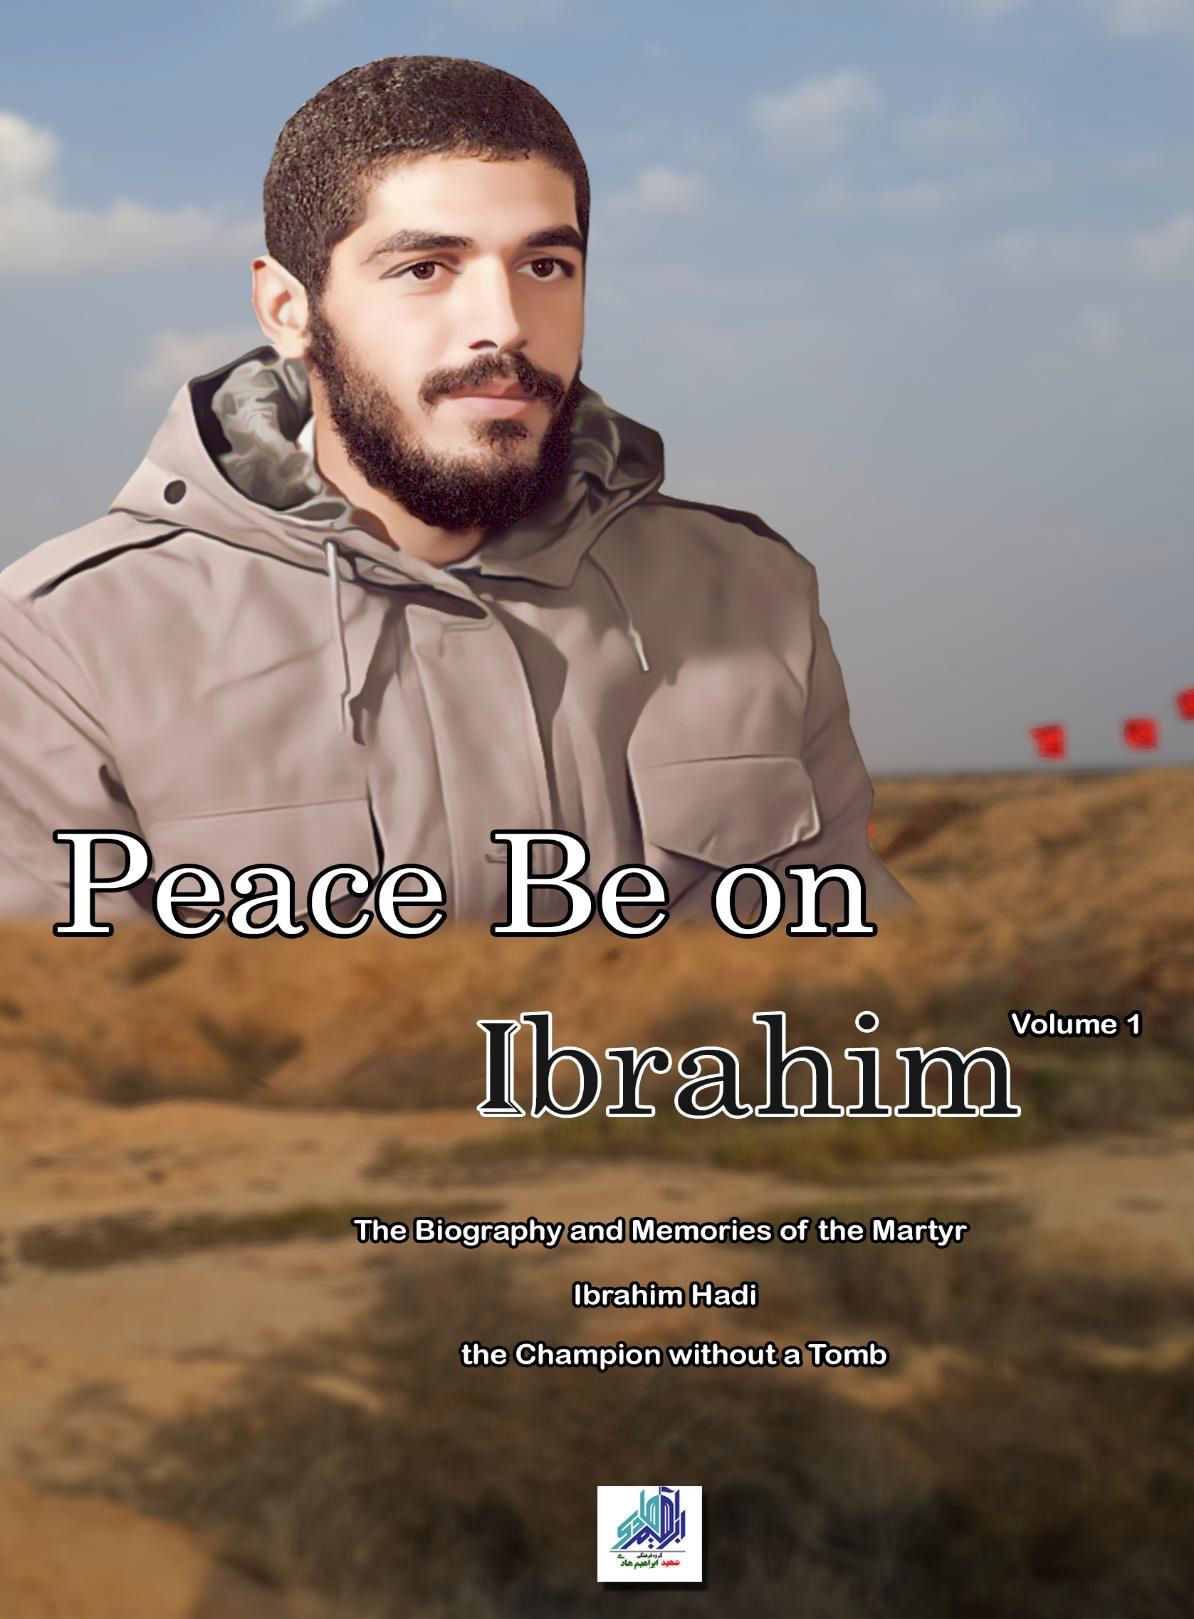 Peace be on Ibrahim